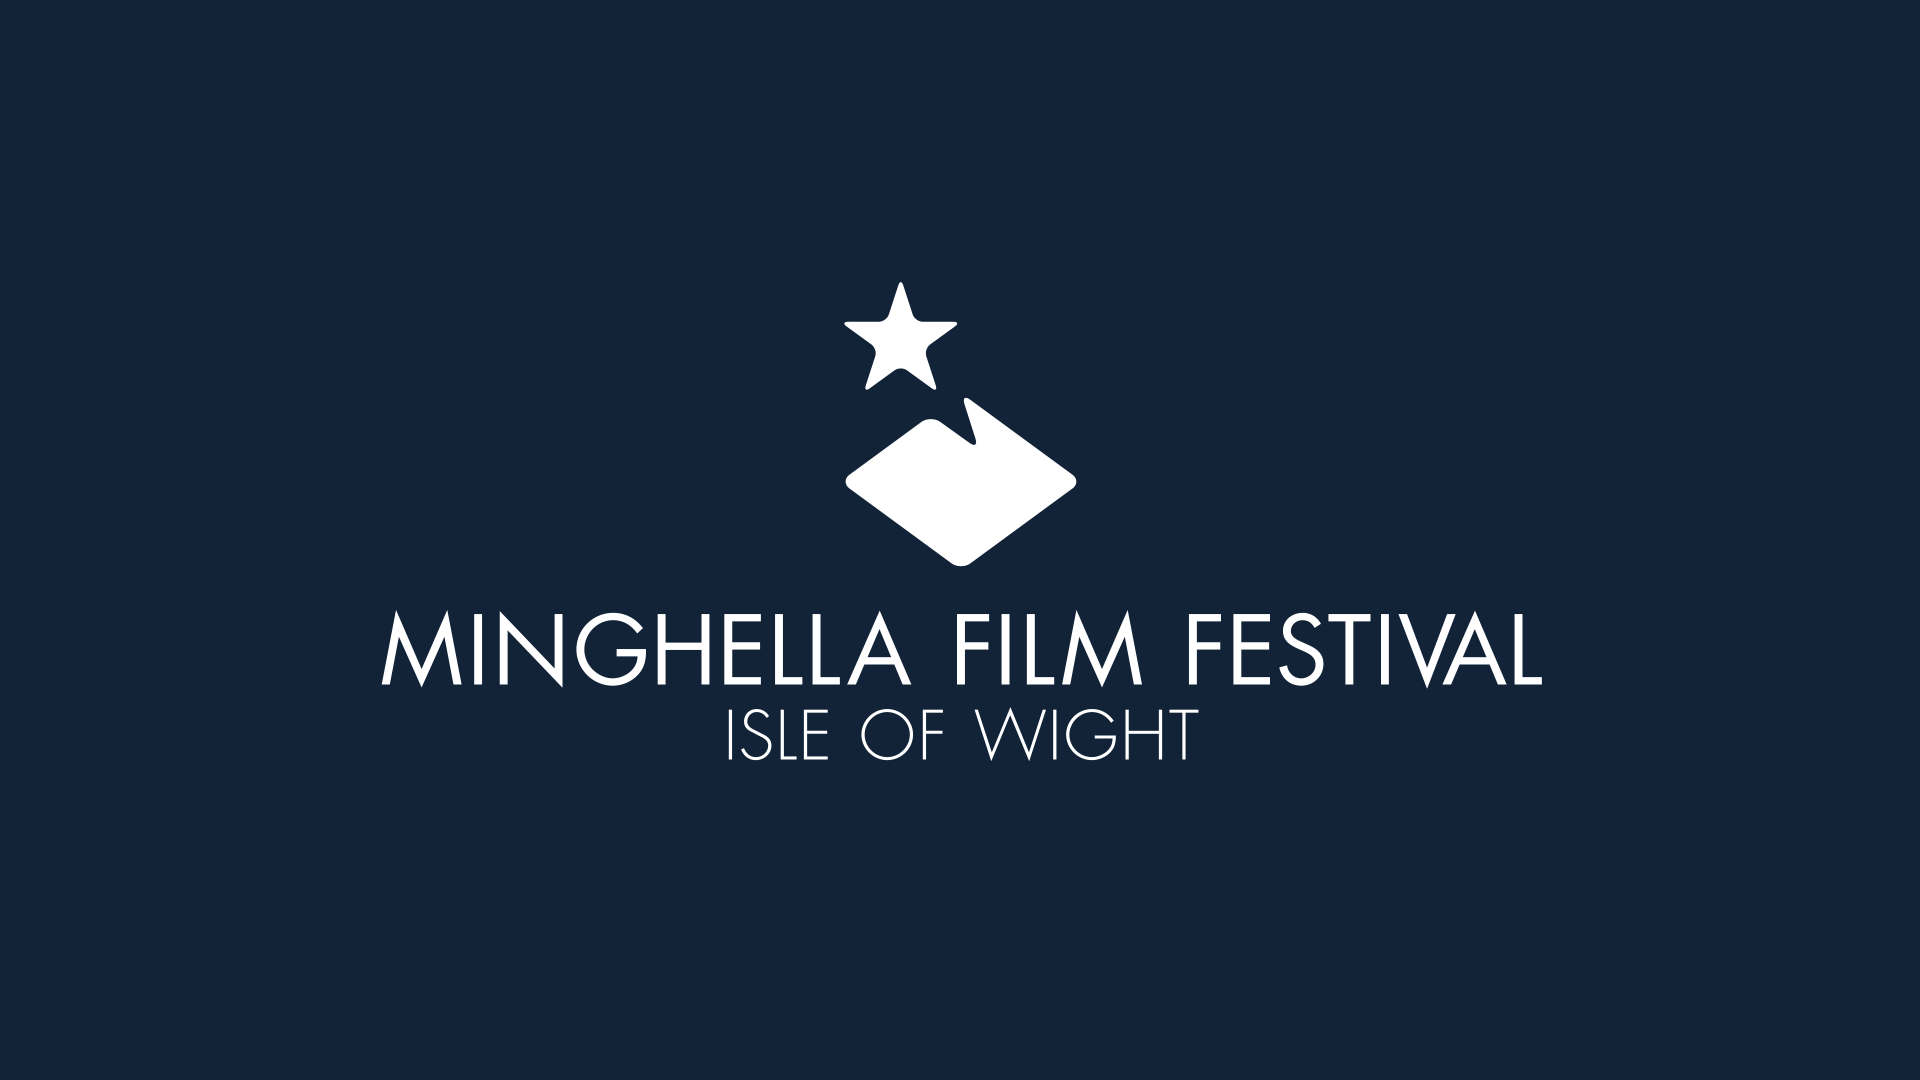 Jason Ford - Minghella Film Festival Identity